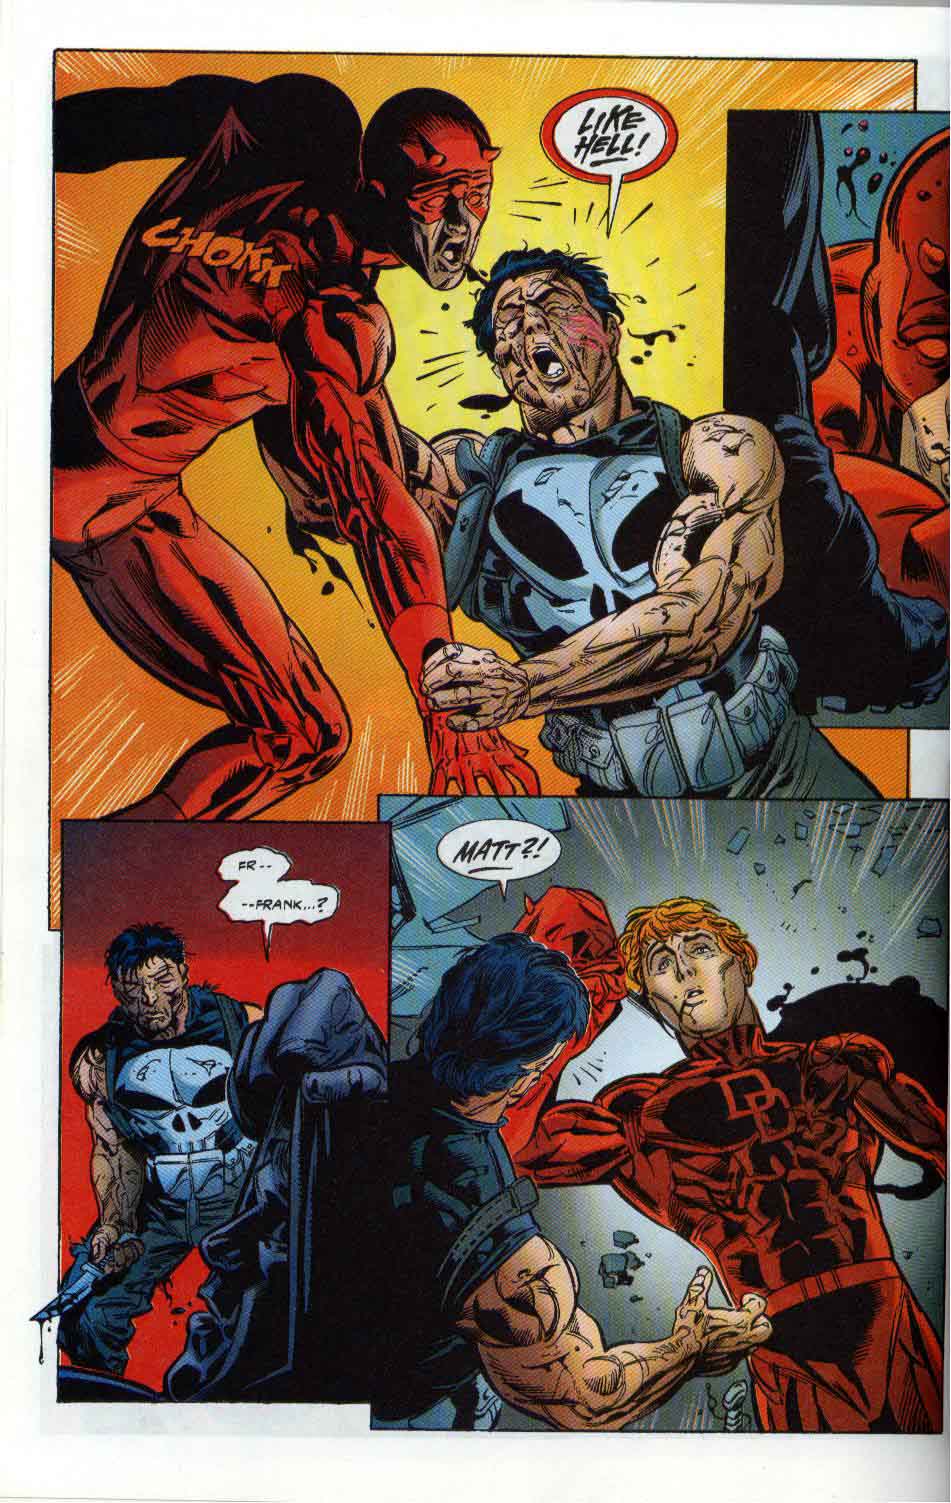 Punisher Kills The Marvel Universe Issue 1 Read Punisher Kills The